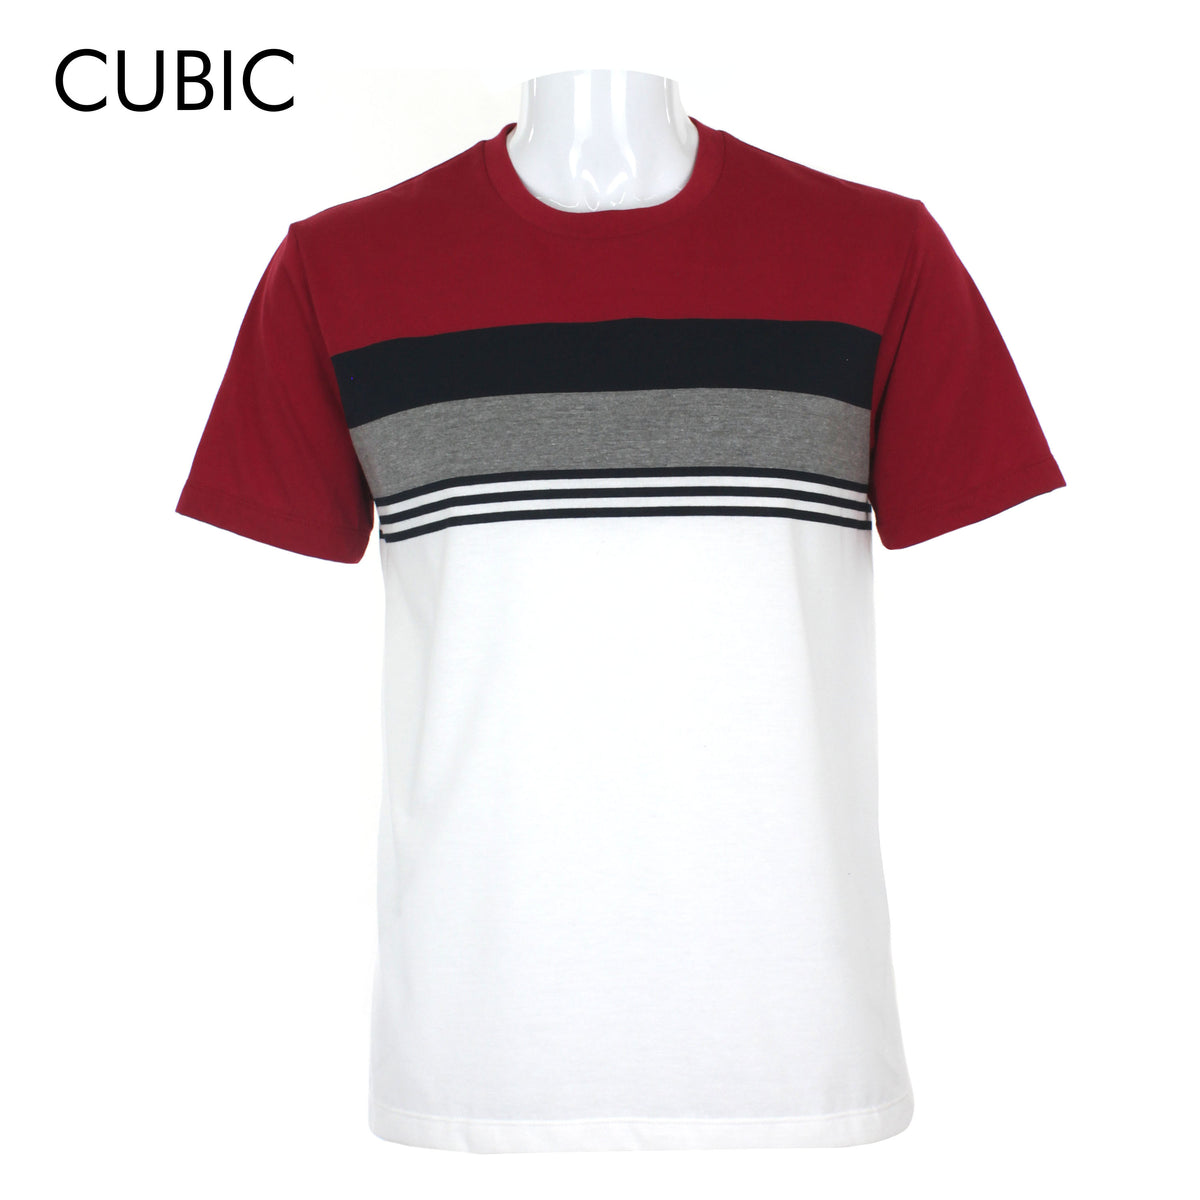 Cubic Men Round Neck Tees T-shirt Stripes Shirt Top Top for Men - CMS2303R